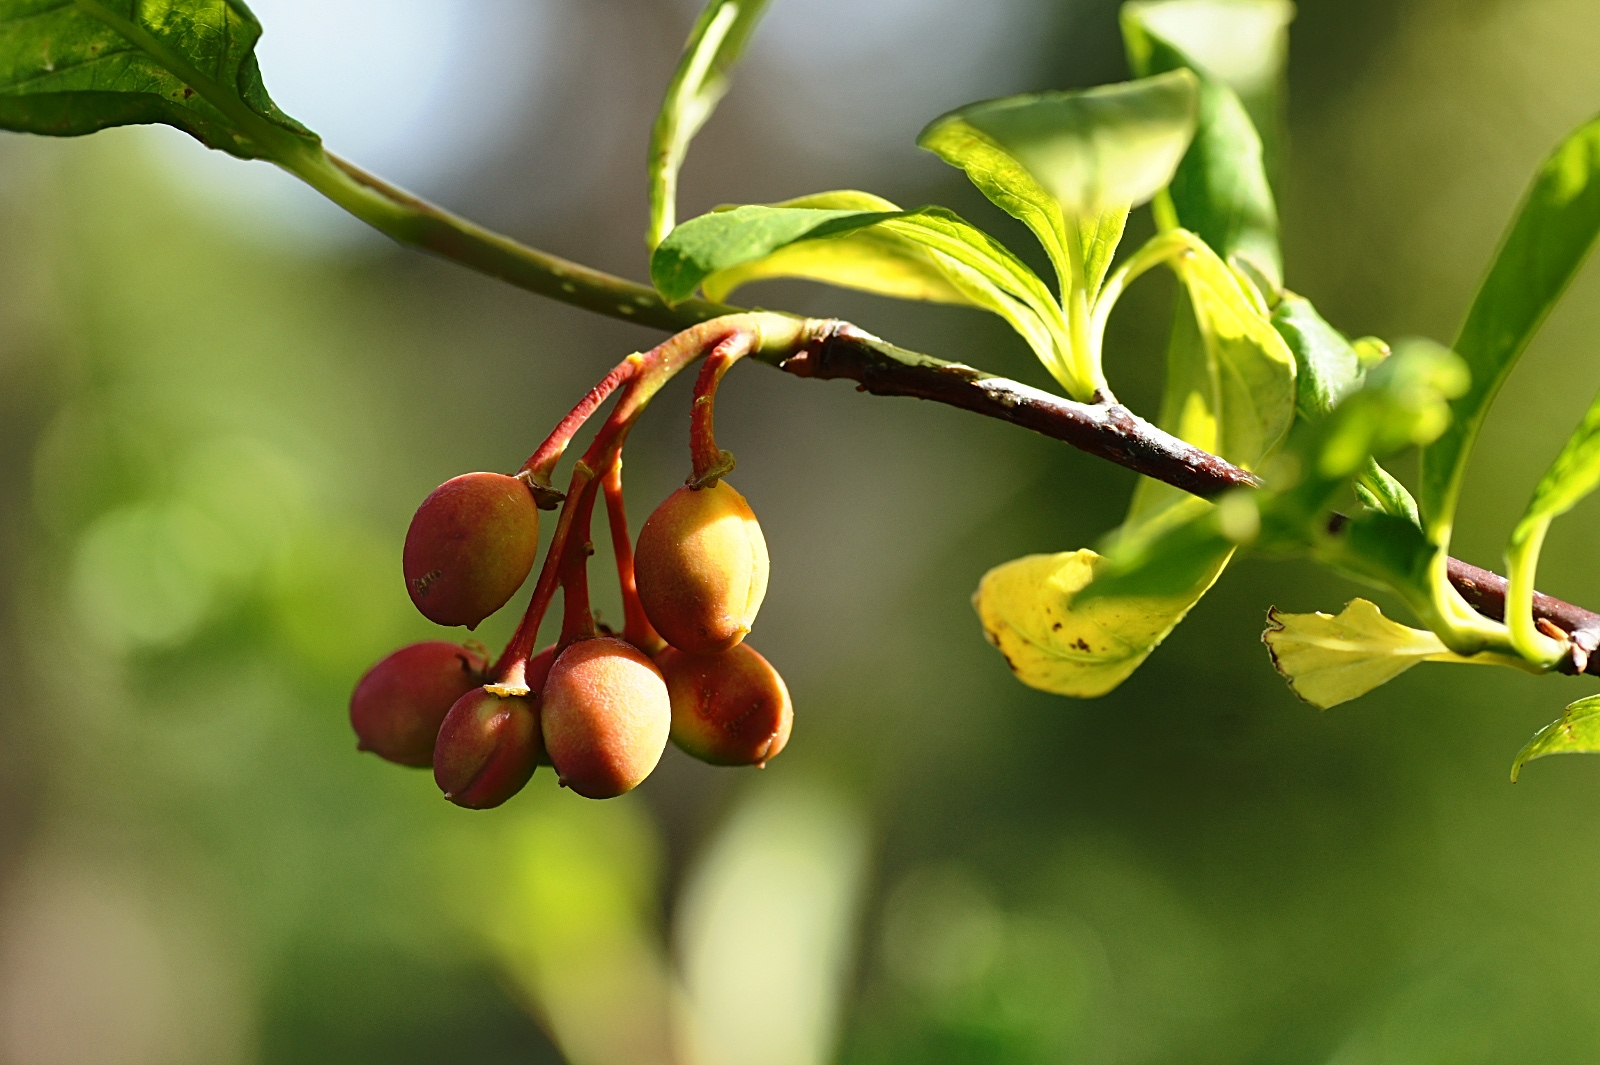 Fruits In Spring Season In India